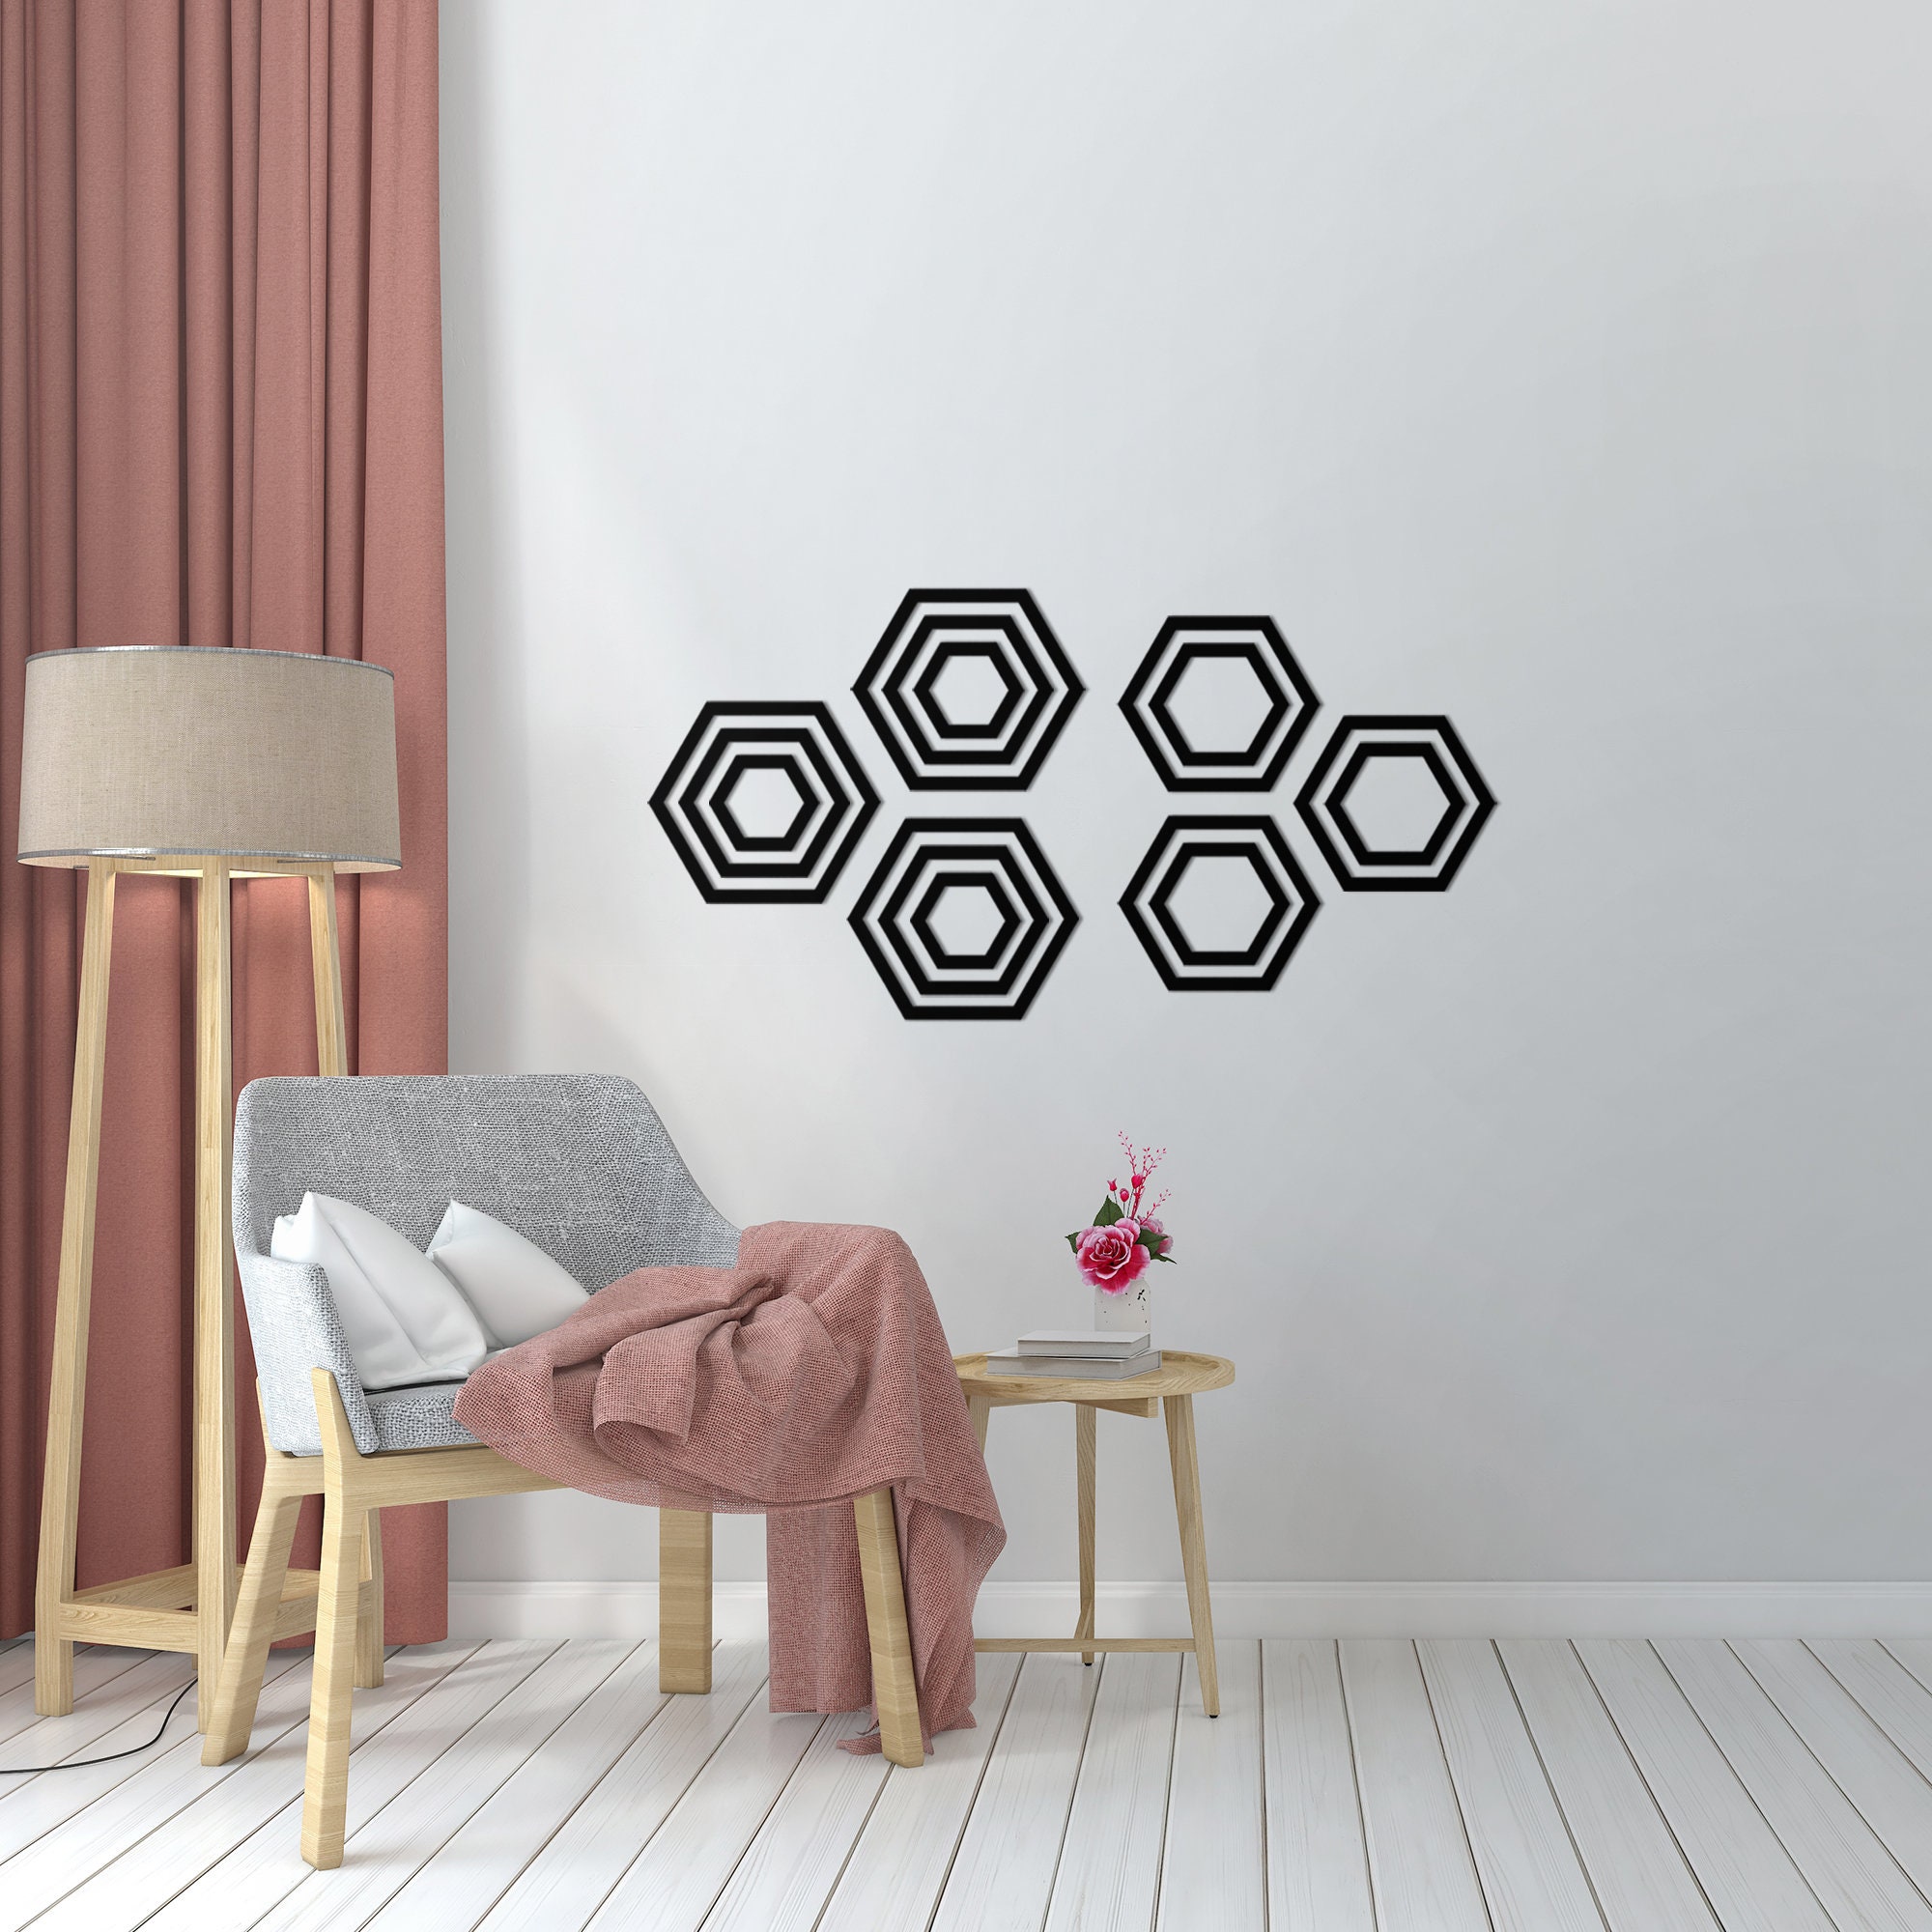 Set of Wall Art - the Hexagon Metal Housewarming Minimalist for Livingroom Wall Decor Gift Decor Etsy Modern 15 Wall